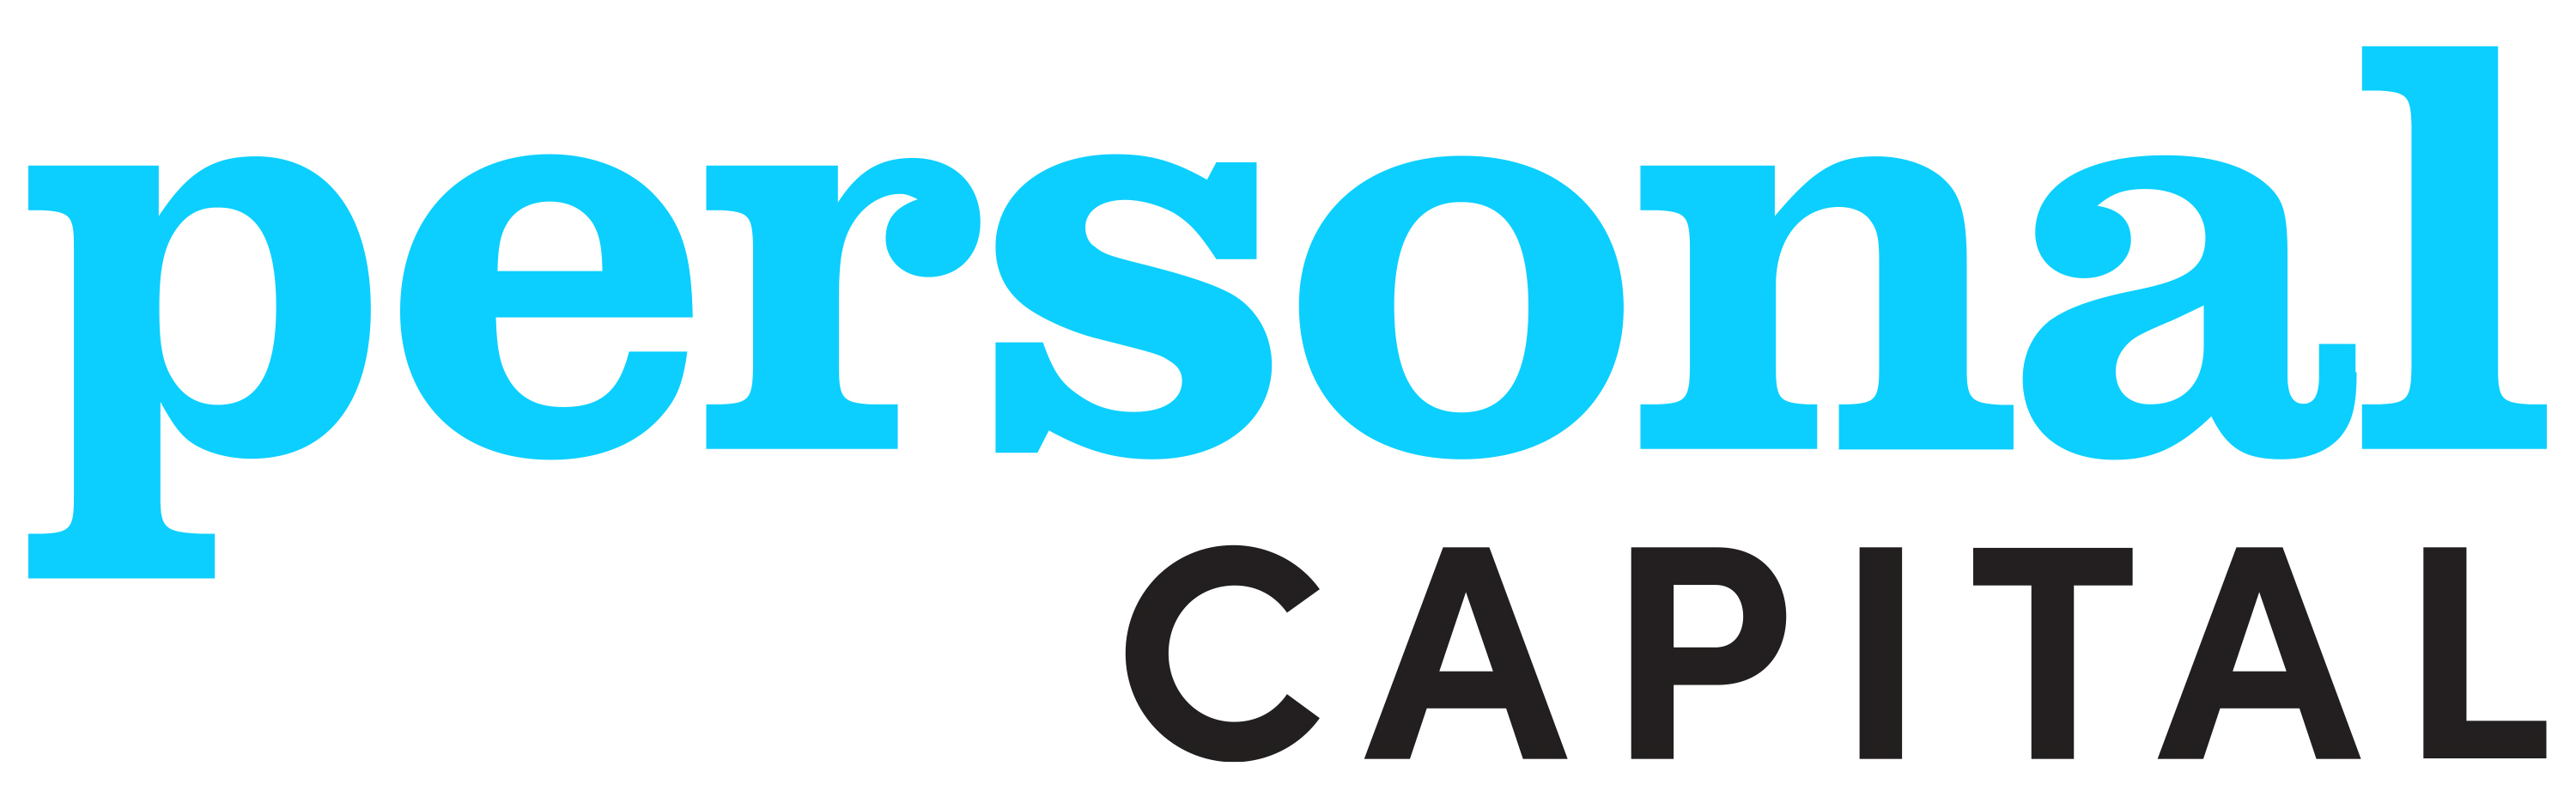 Personal Capital Company Logo